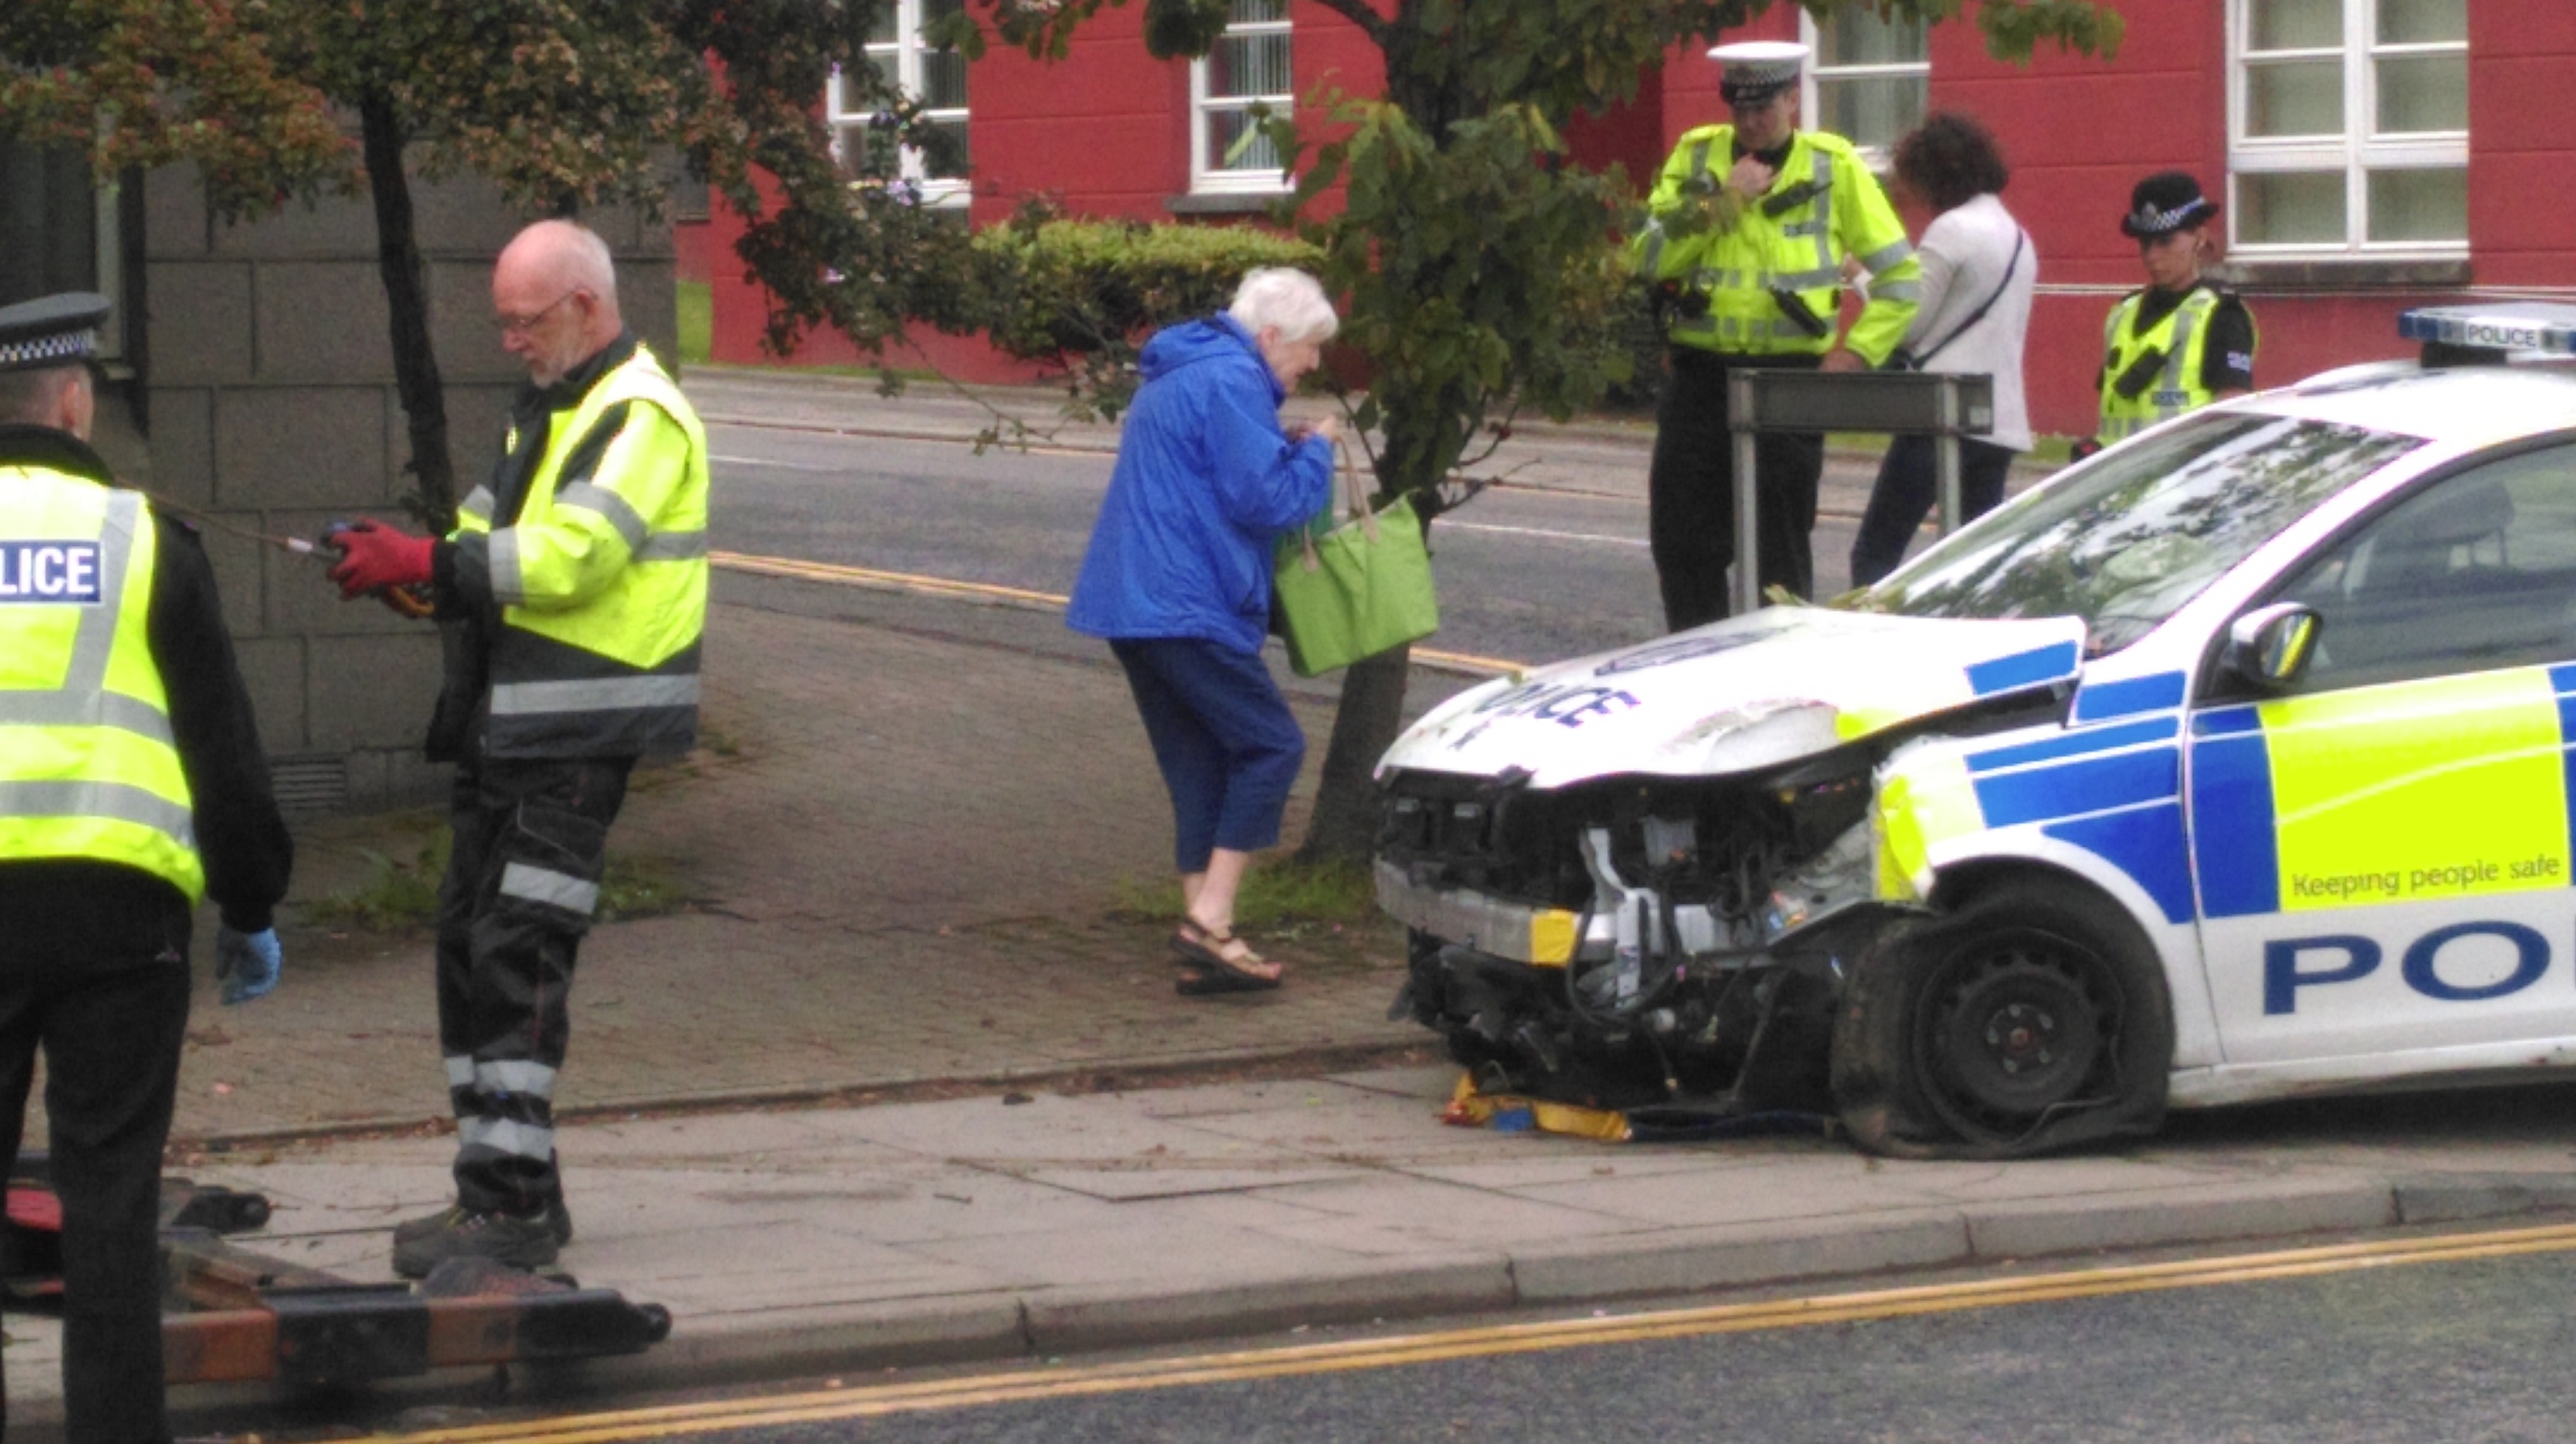 Scene of the crash on Ashgrove Road